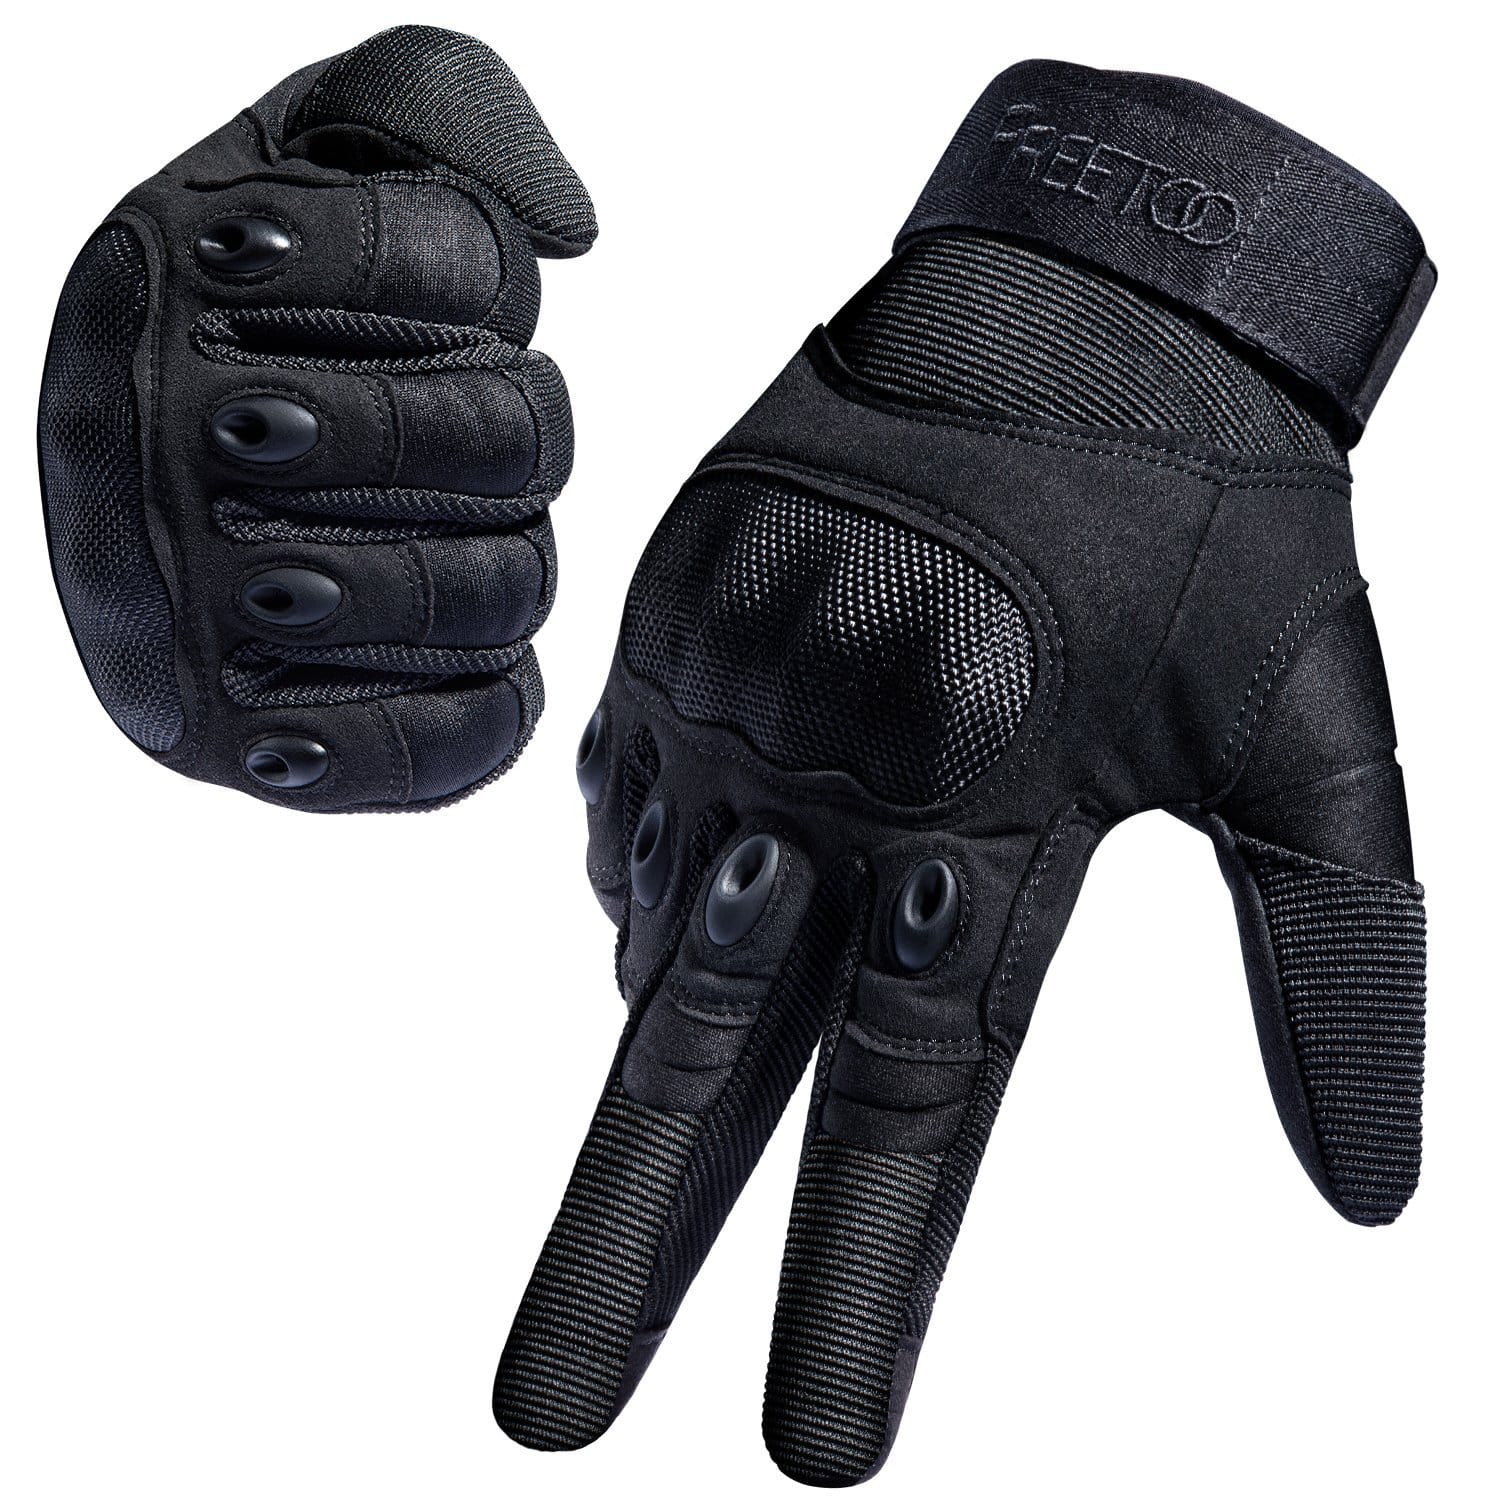 Best Tactical Glove